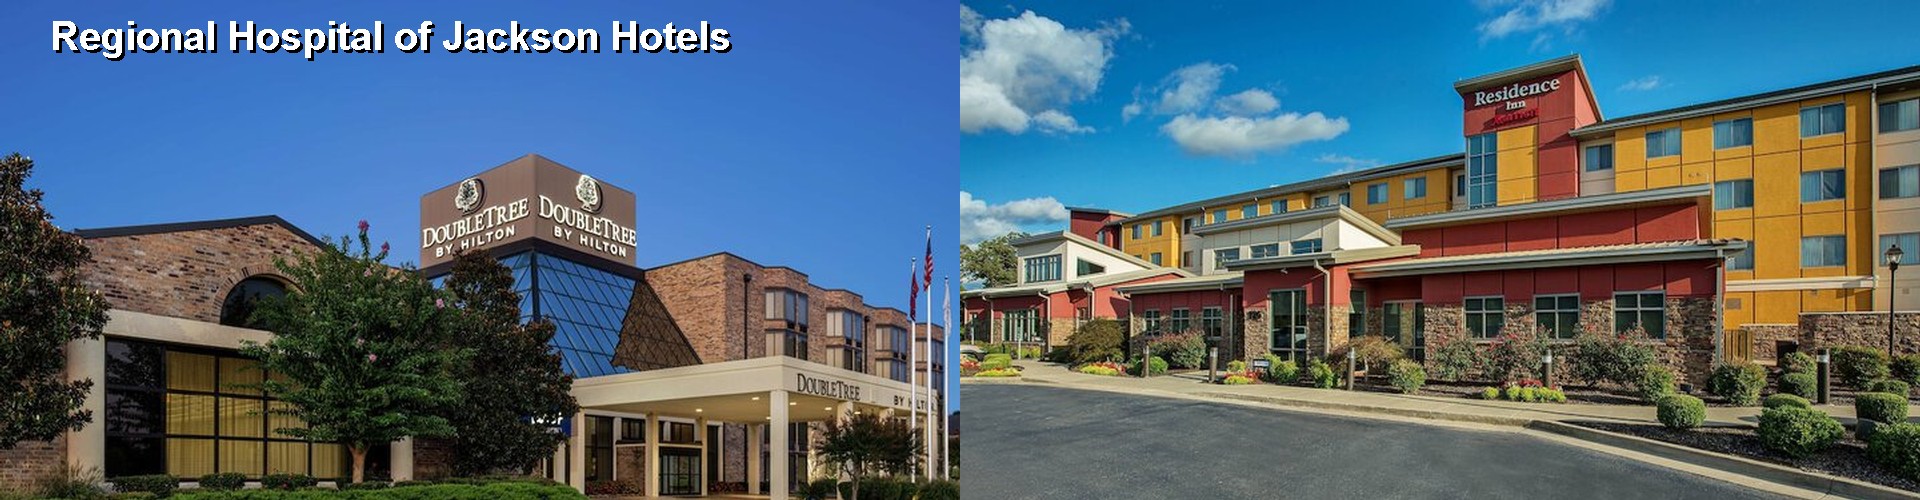 3 Best Hotels near Regional Hospital of Jackson